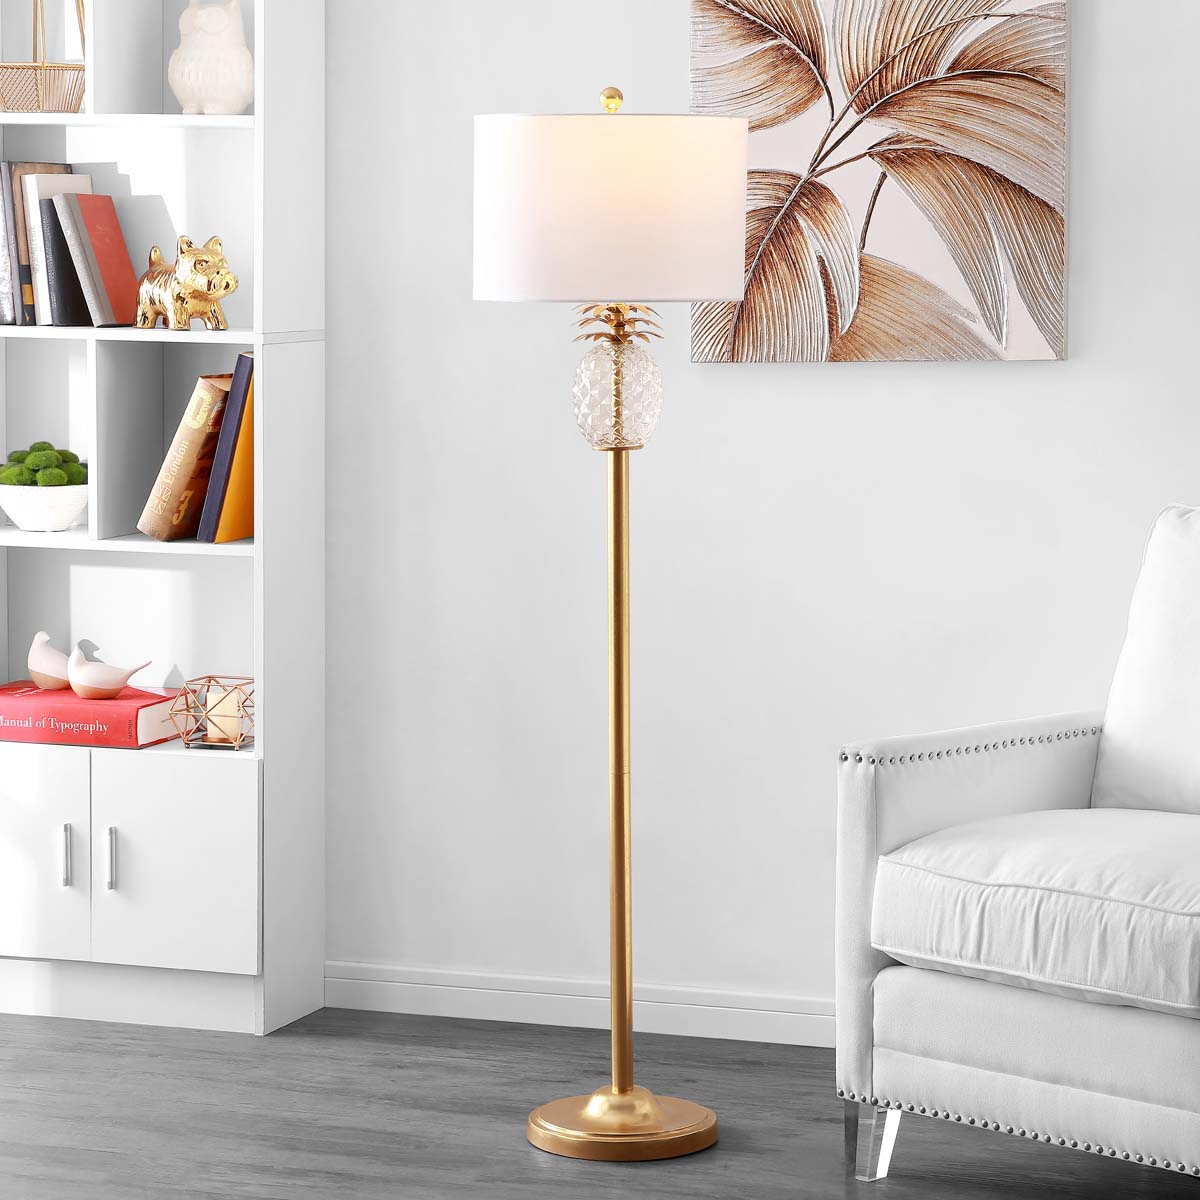 Safavieh Elza Floor Lamp, FLL4086 - Gold Leaf/Clear